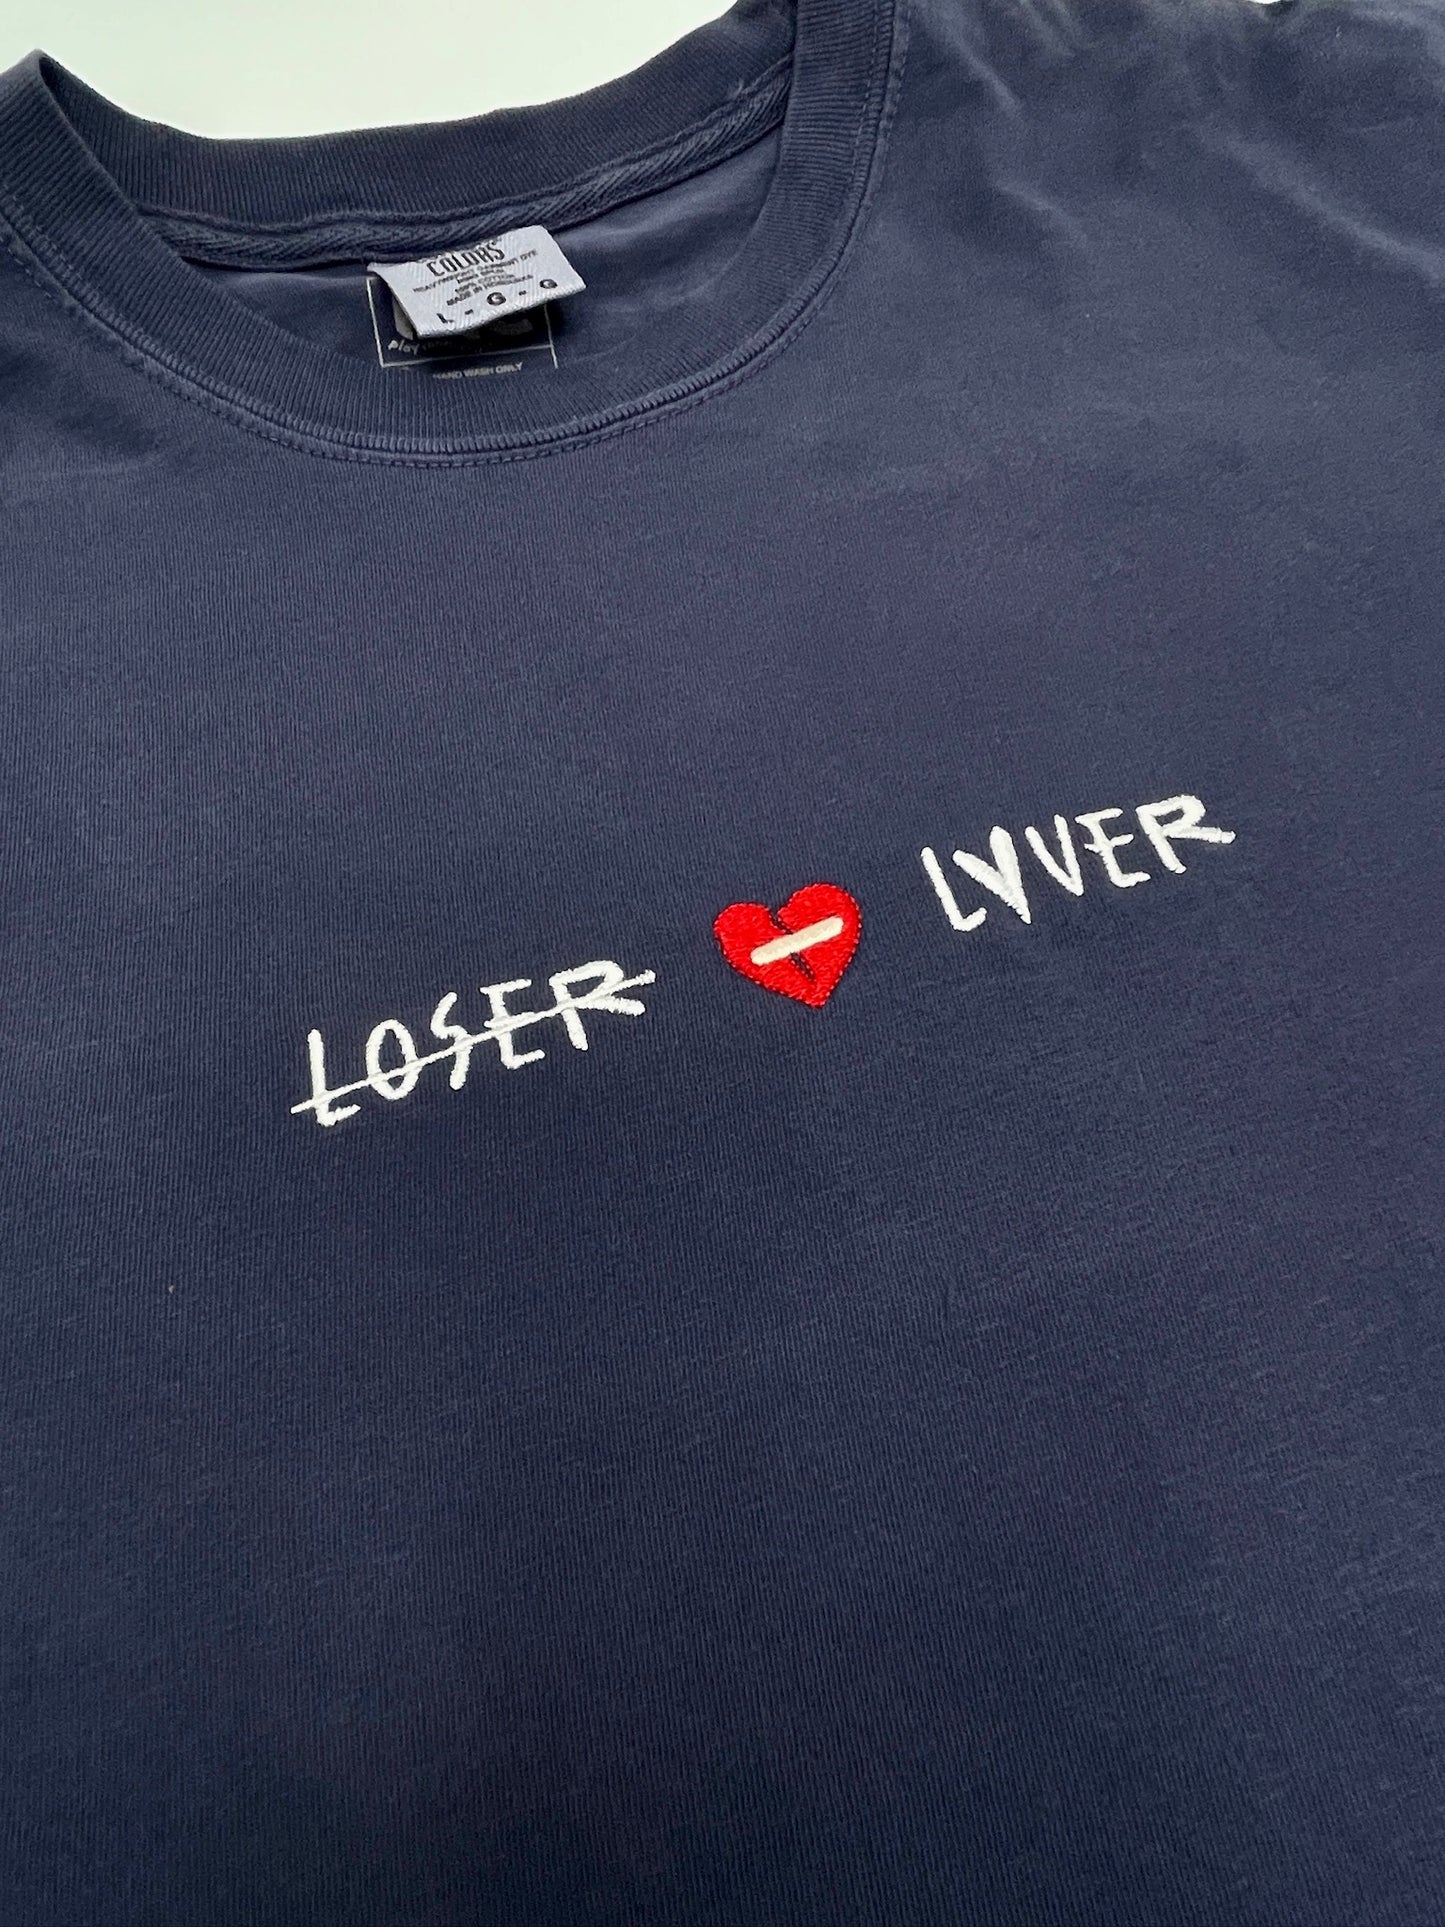 Loser Lover Tee